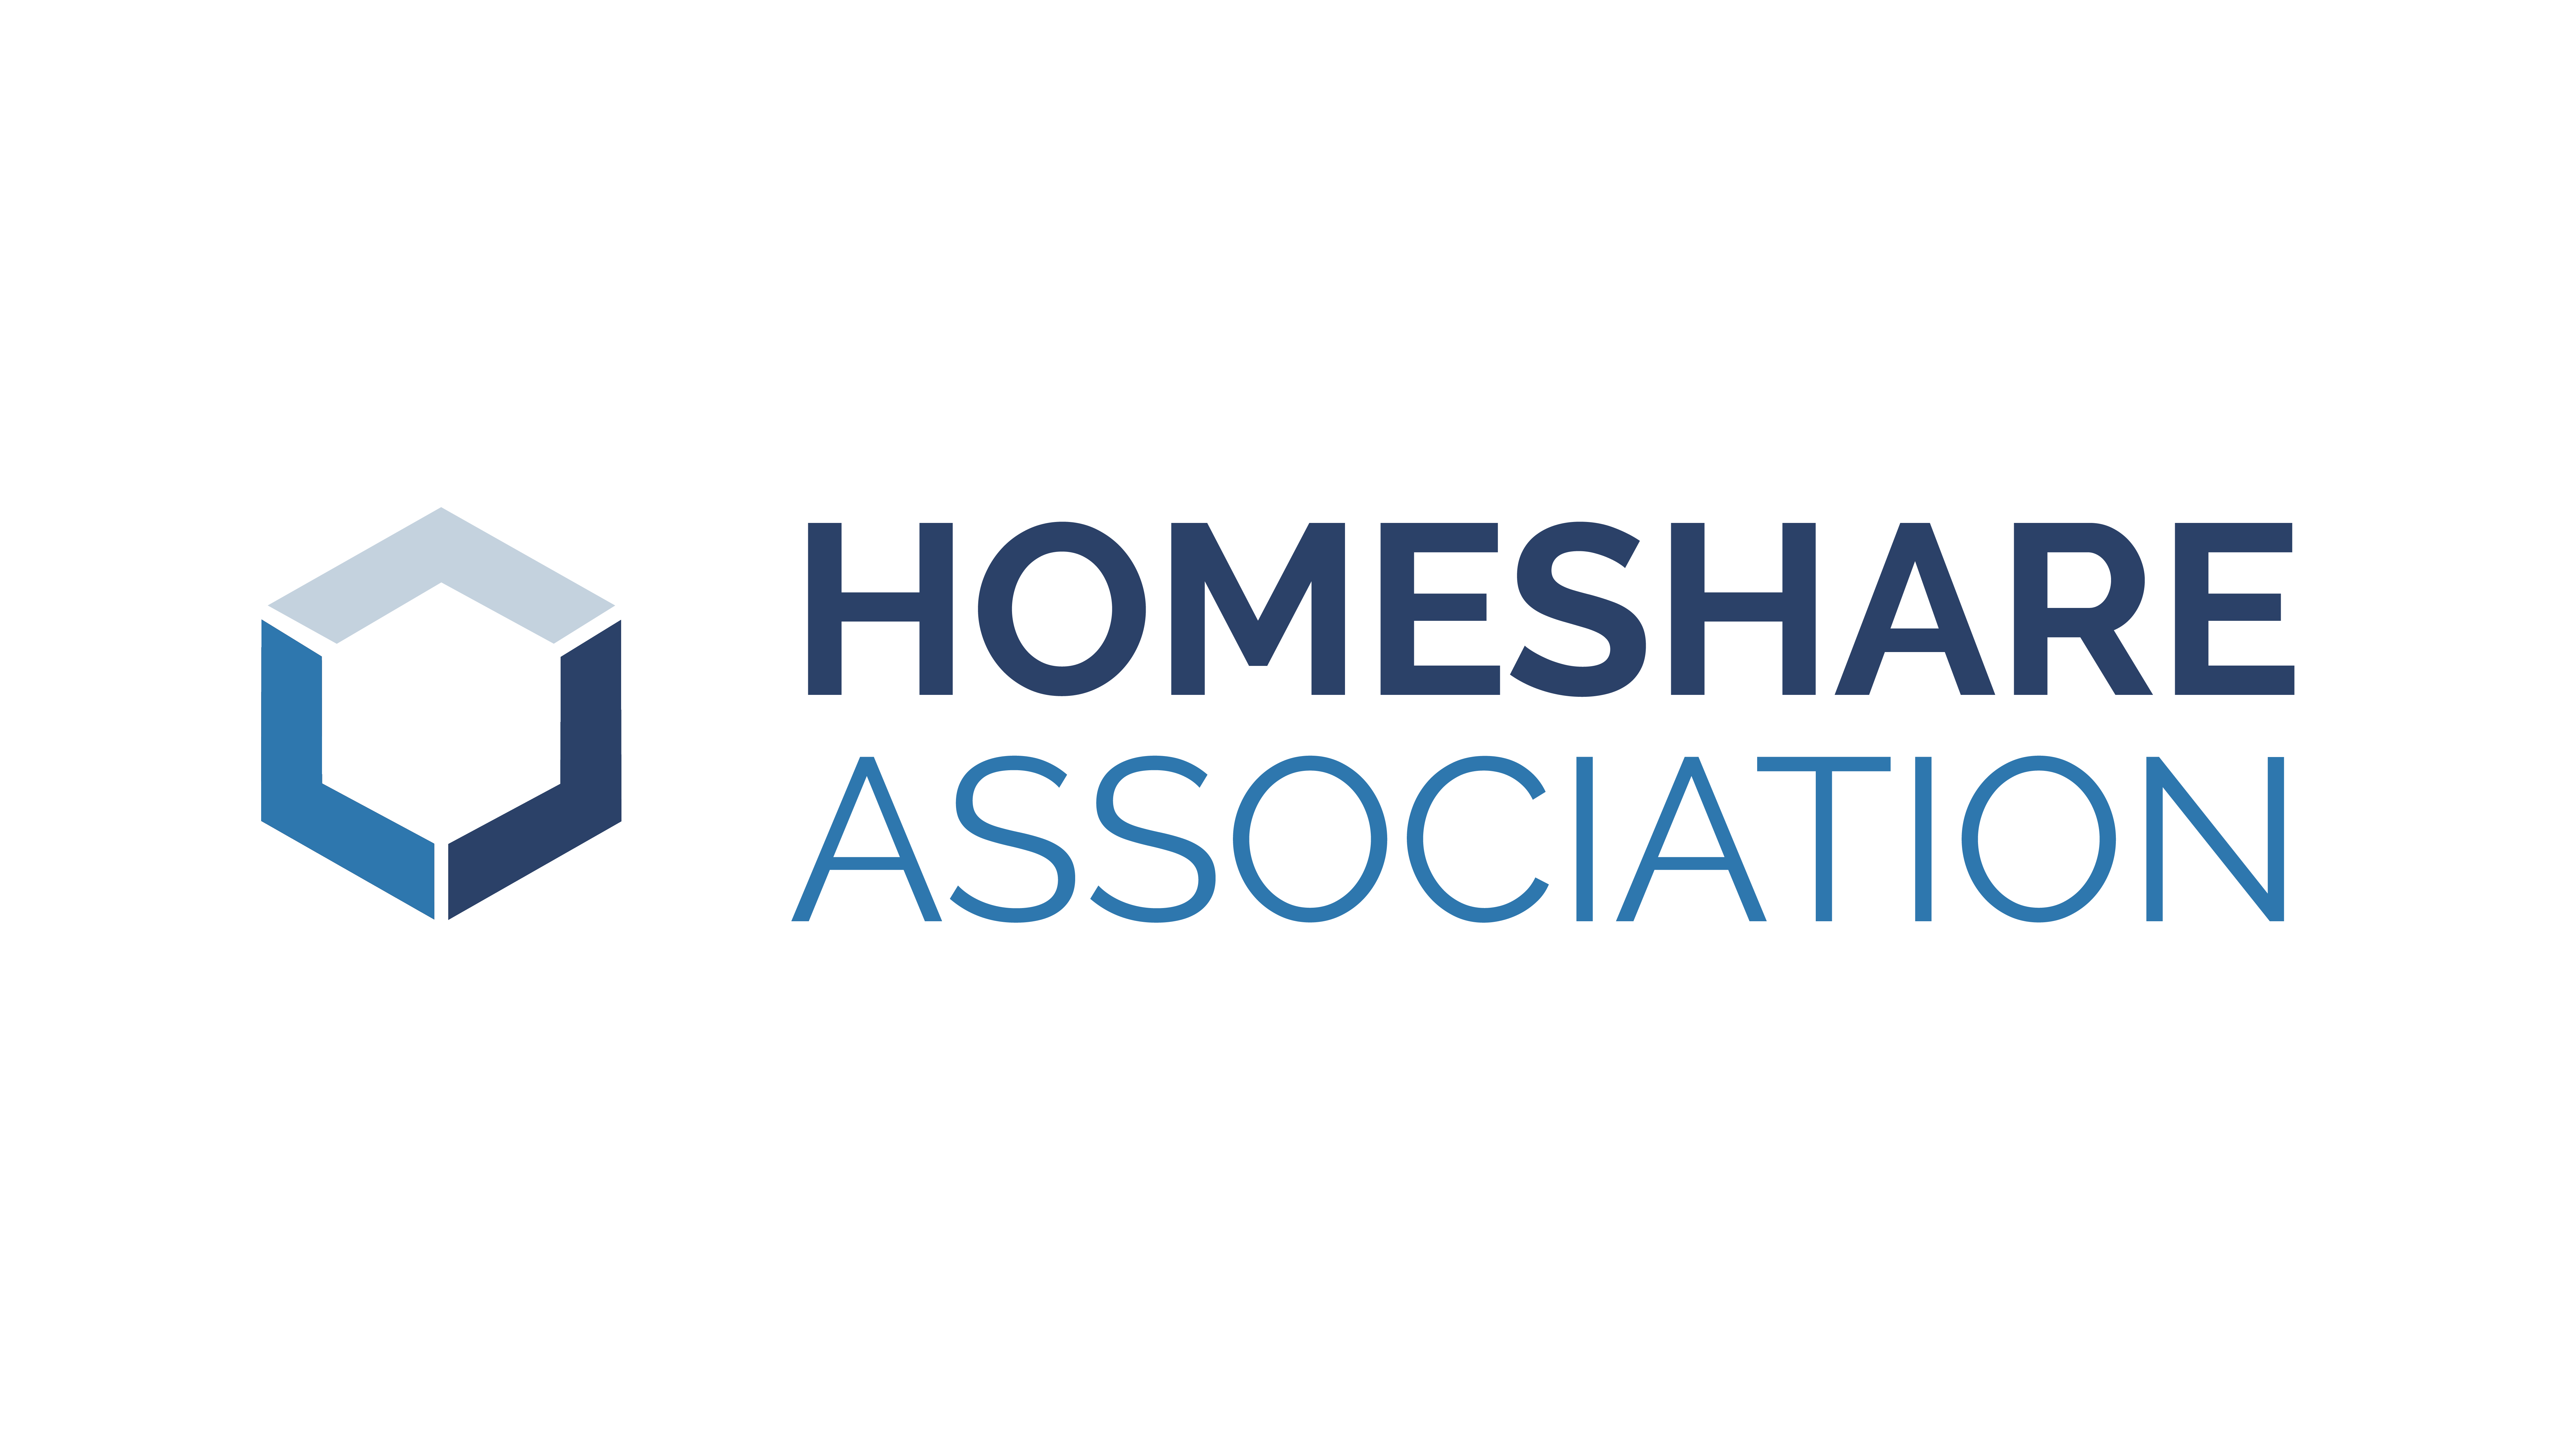 Homeshare Association logo